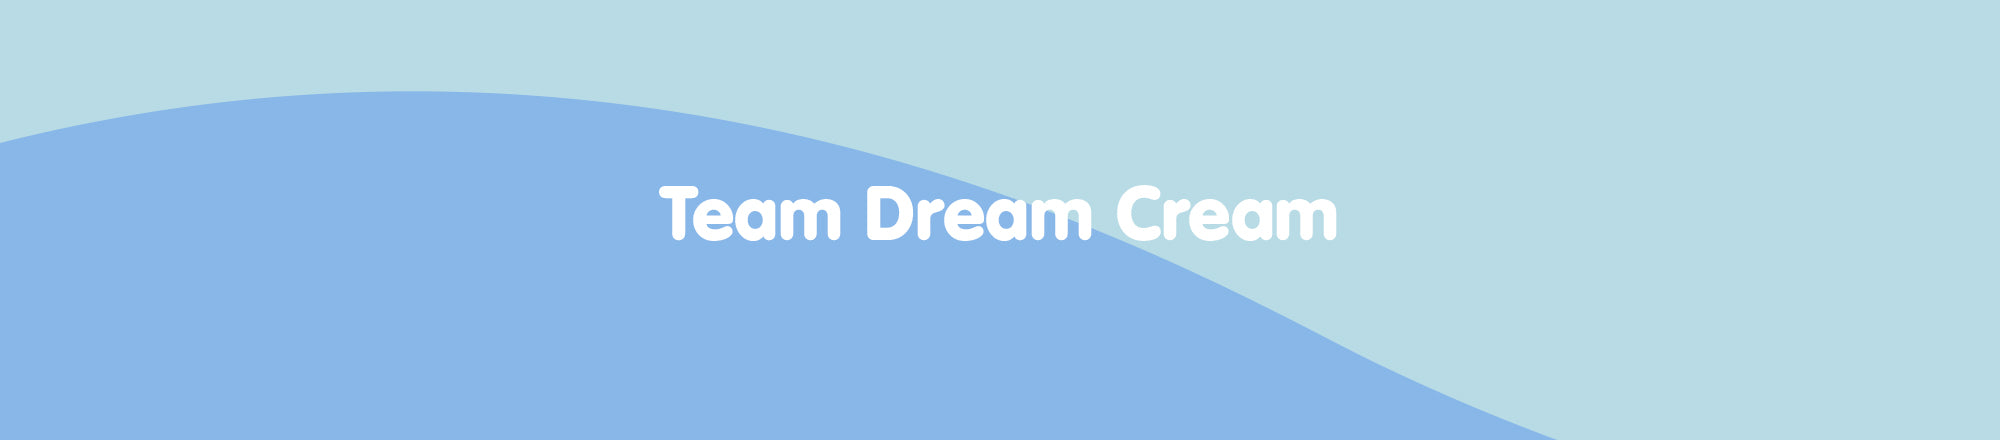 Dream cream product page